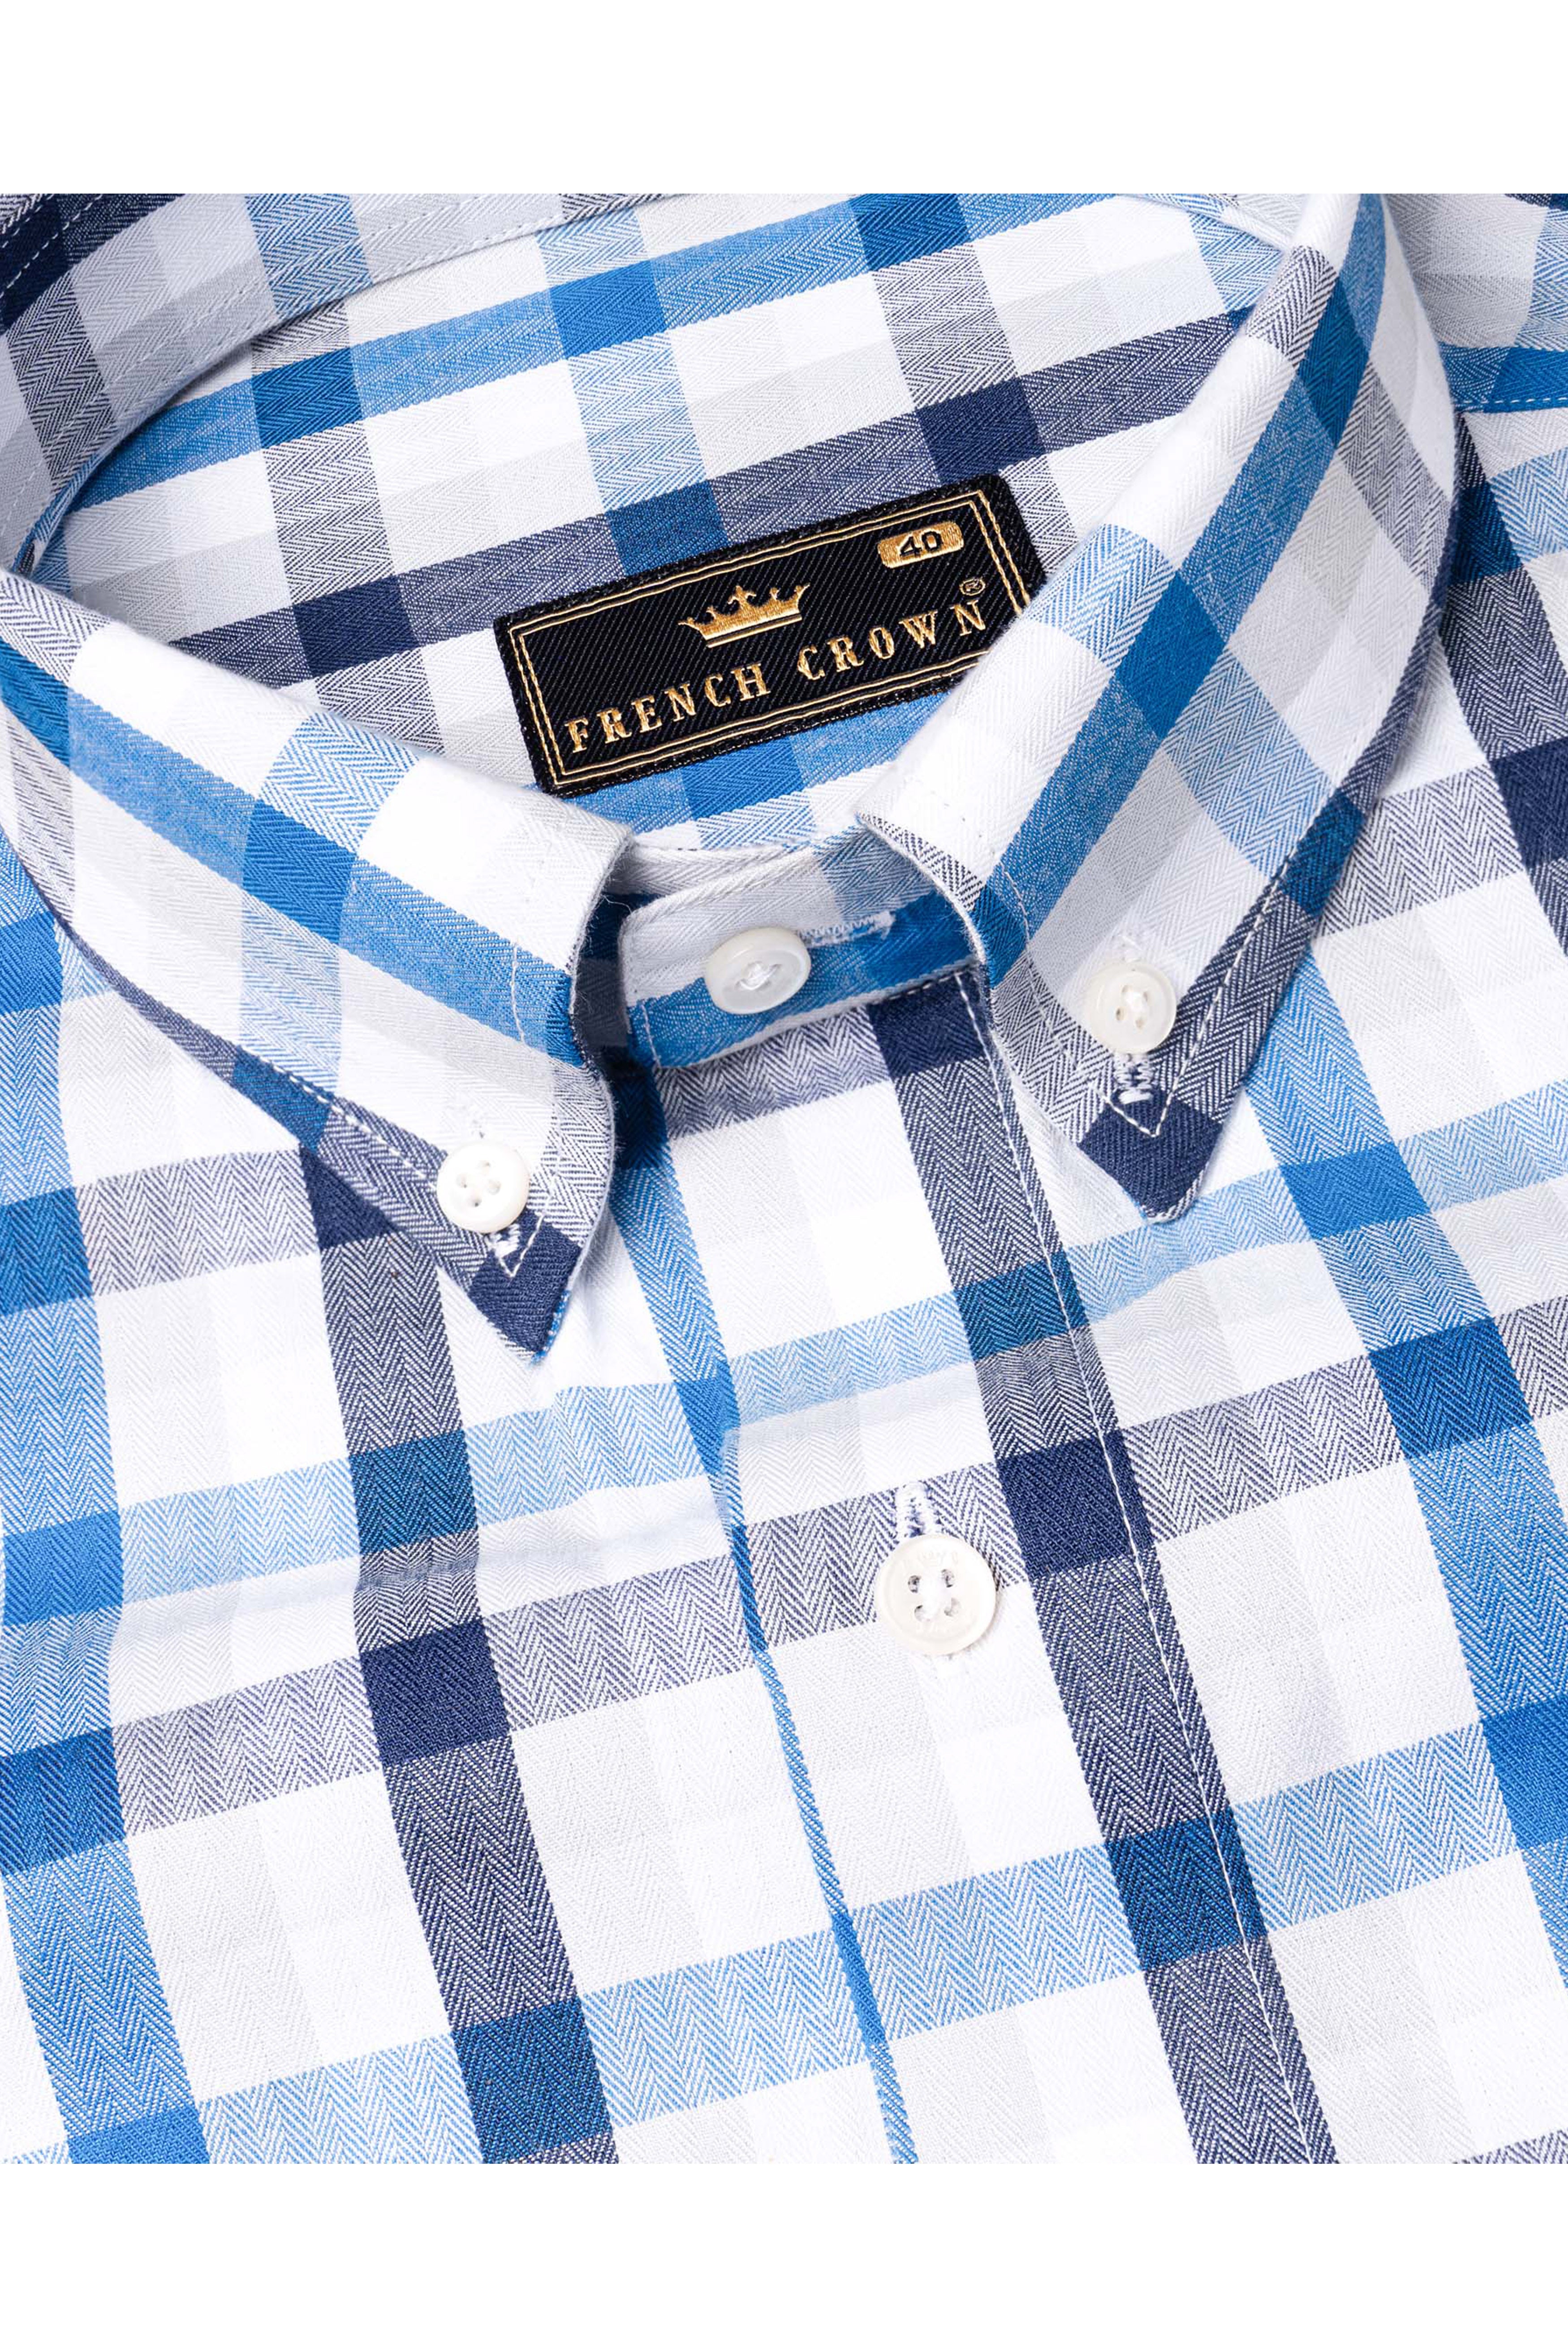 Downriver Blue and White Checkered with Funky Printed Herringbone Designer Shirt